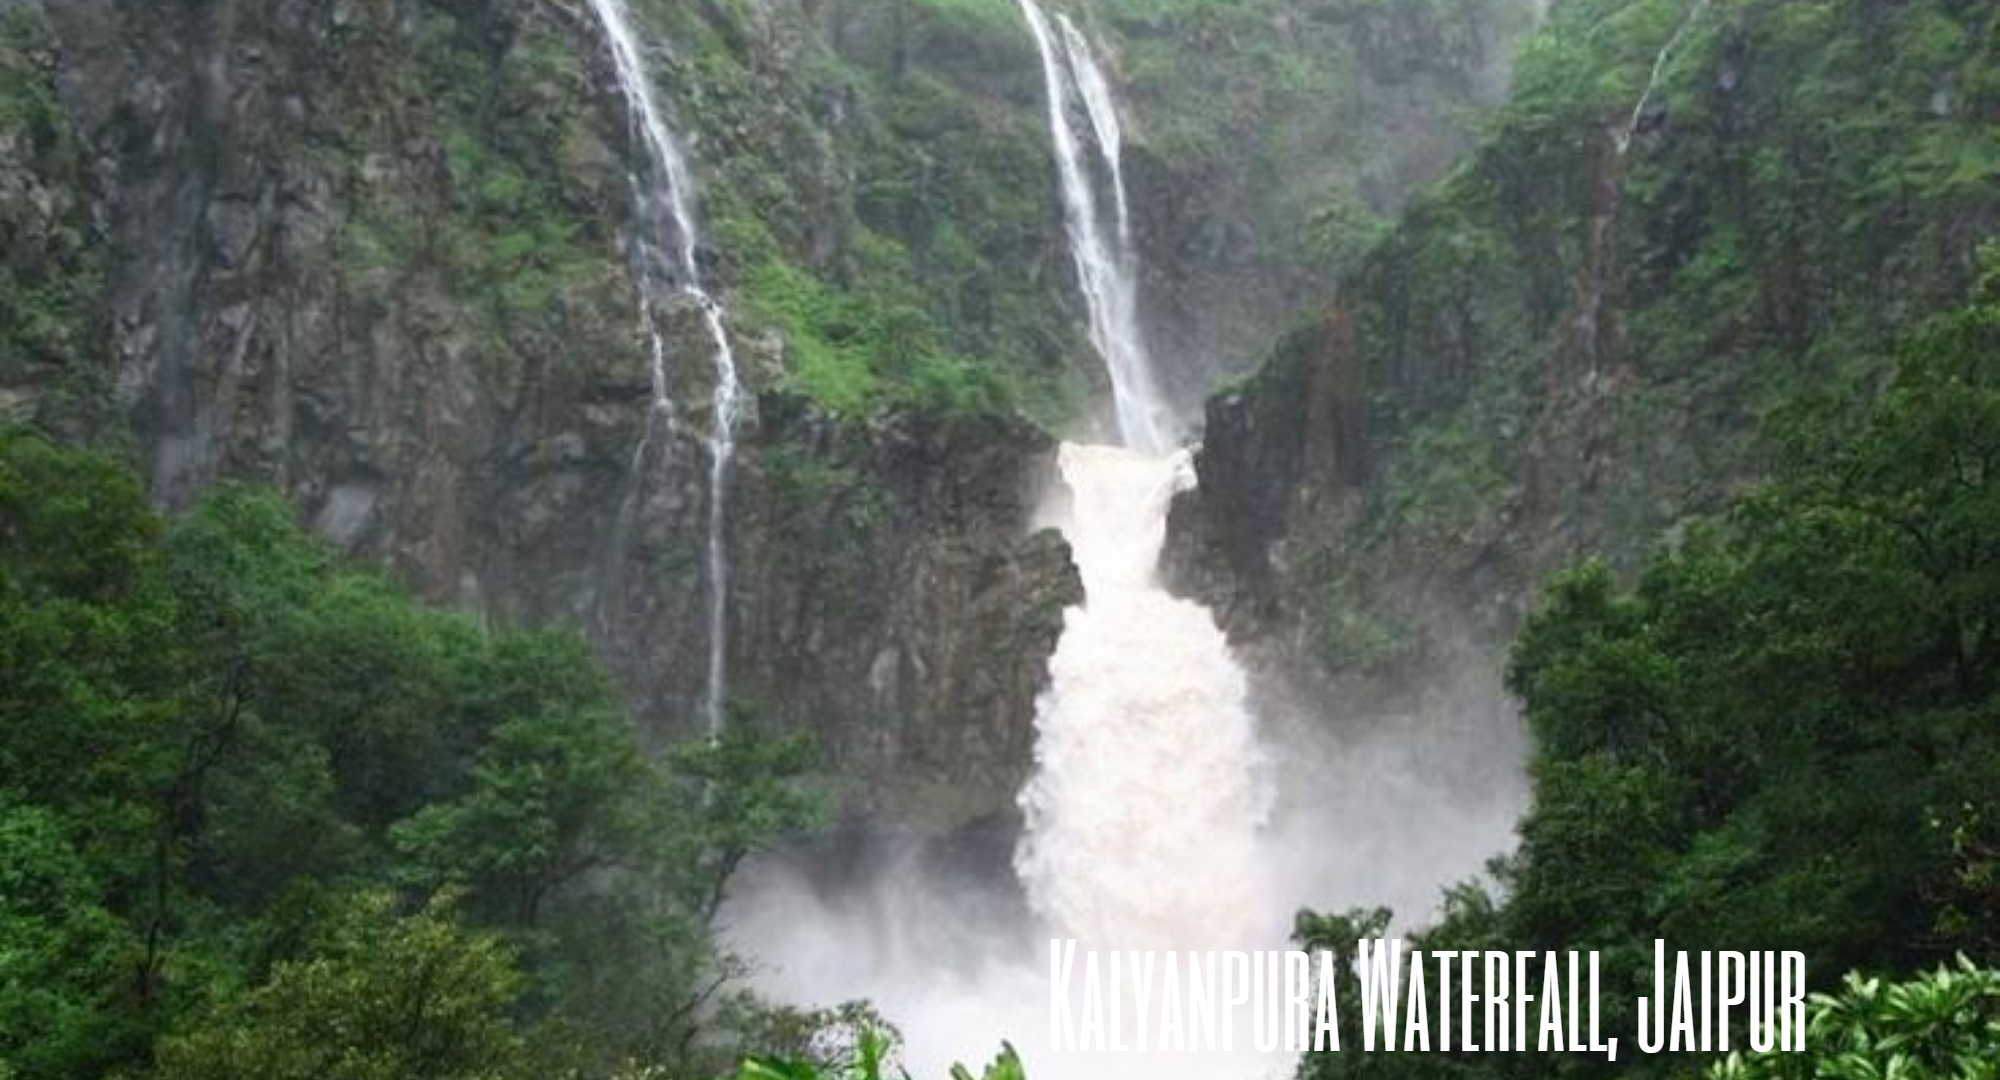 waterfall in jaipur, hathni kund jaipur, jharna near me, waterfall in rajasthan, waterfall near jaipur